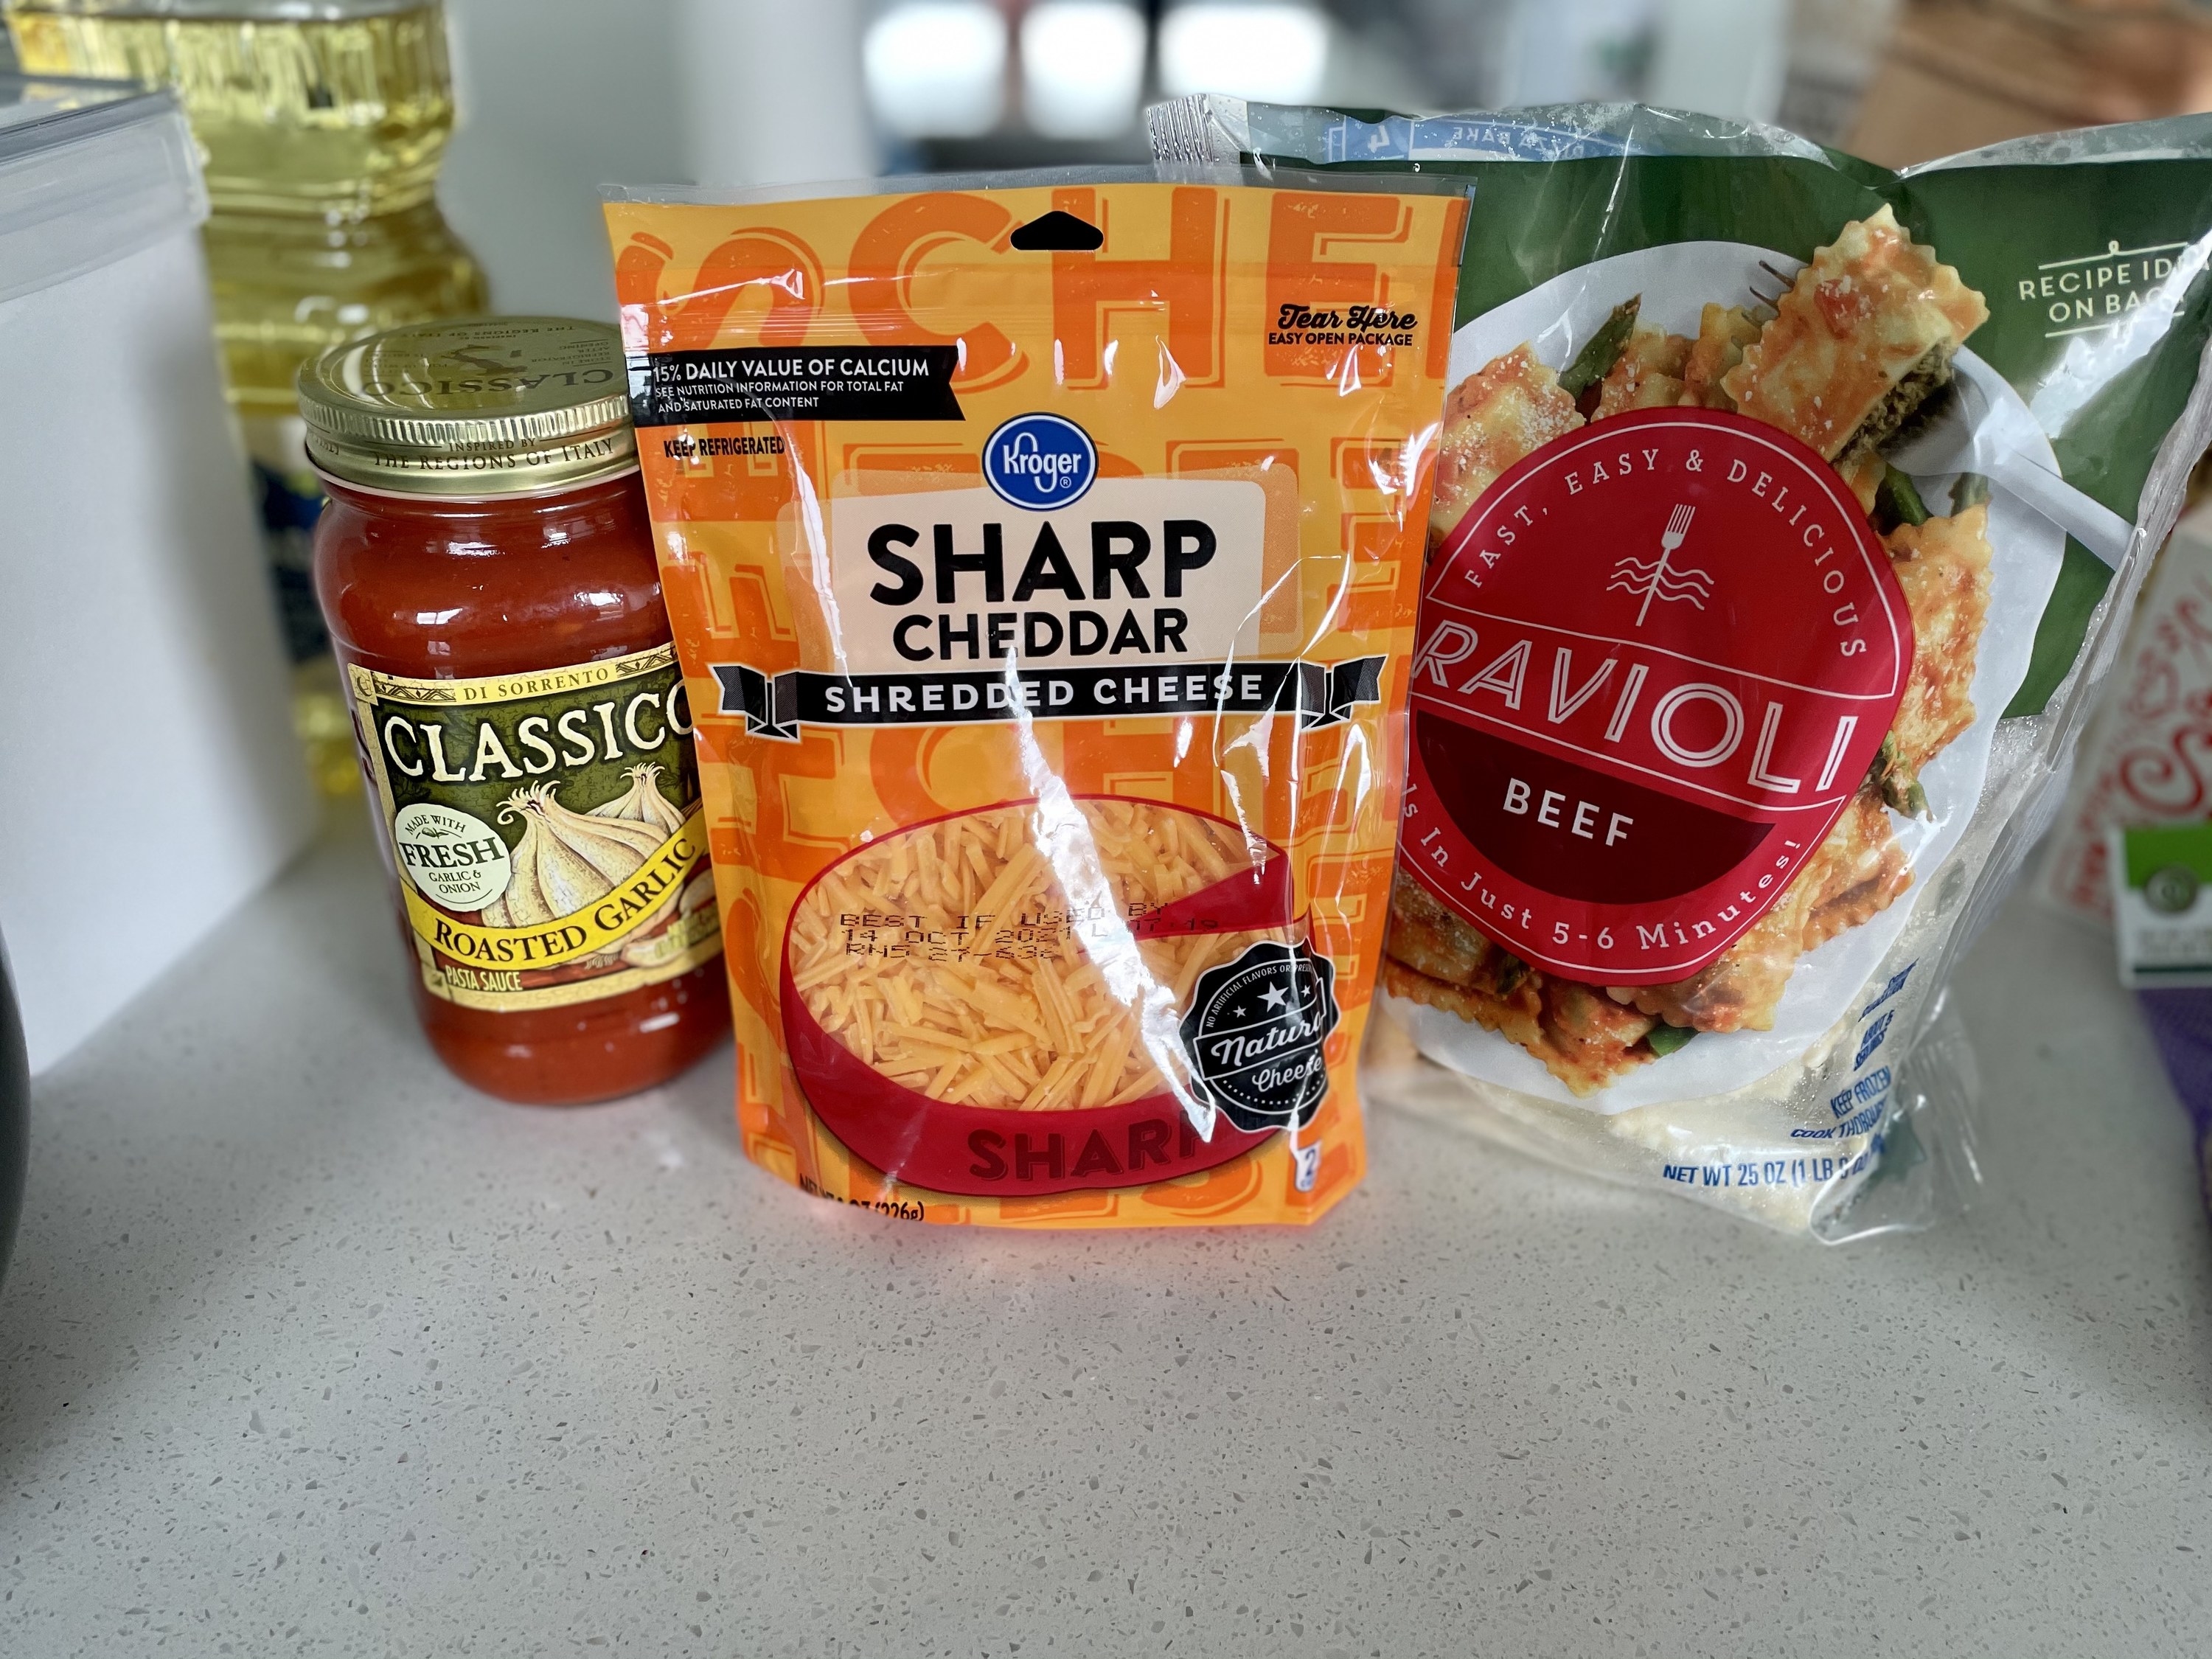 Ingredients for ravioli